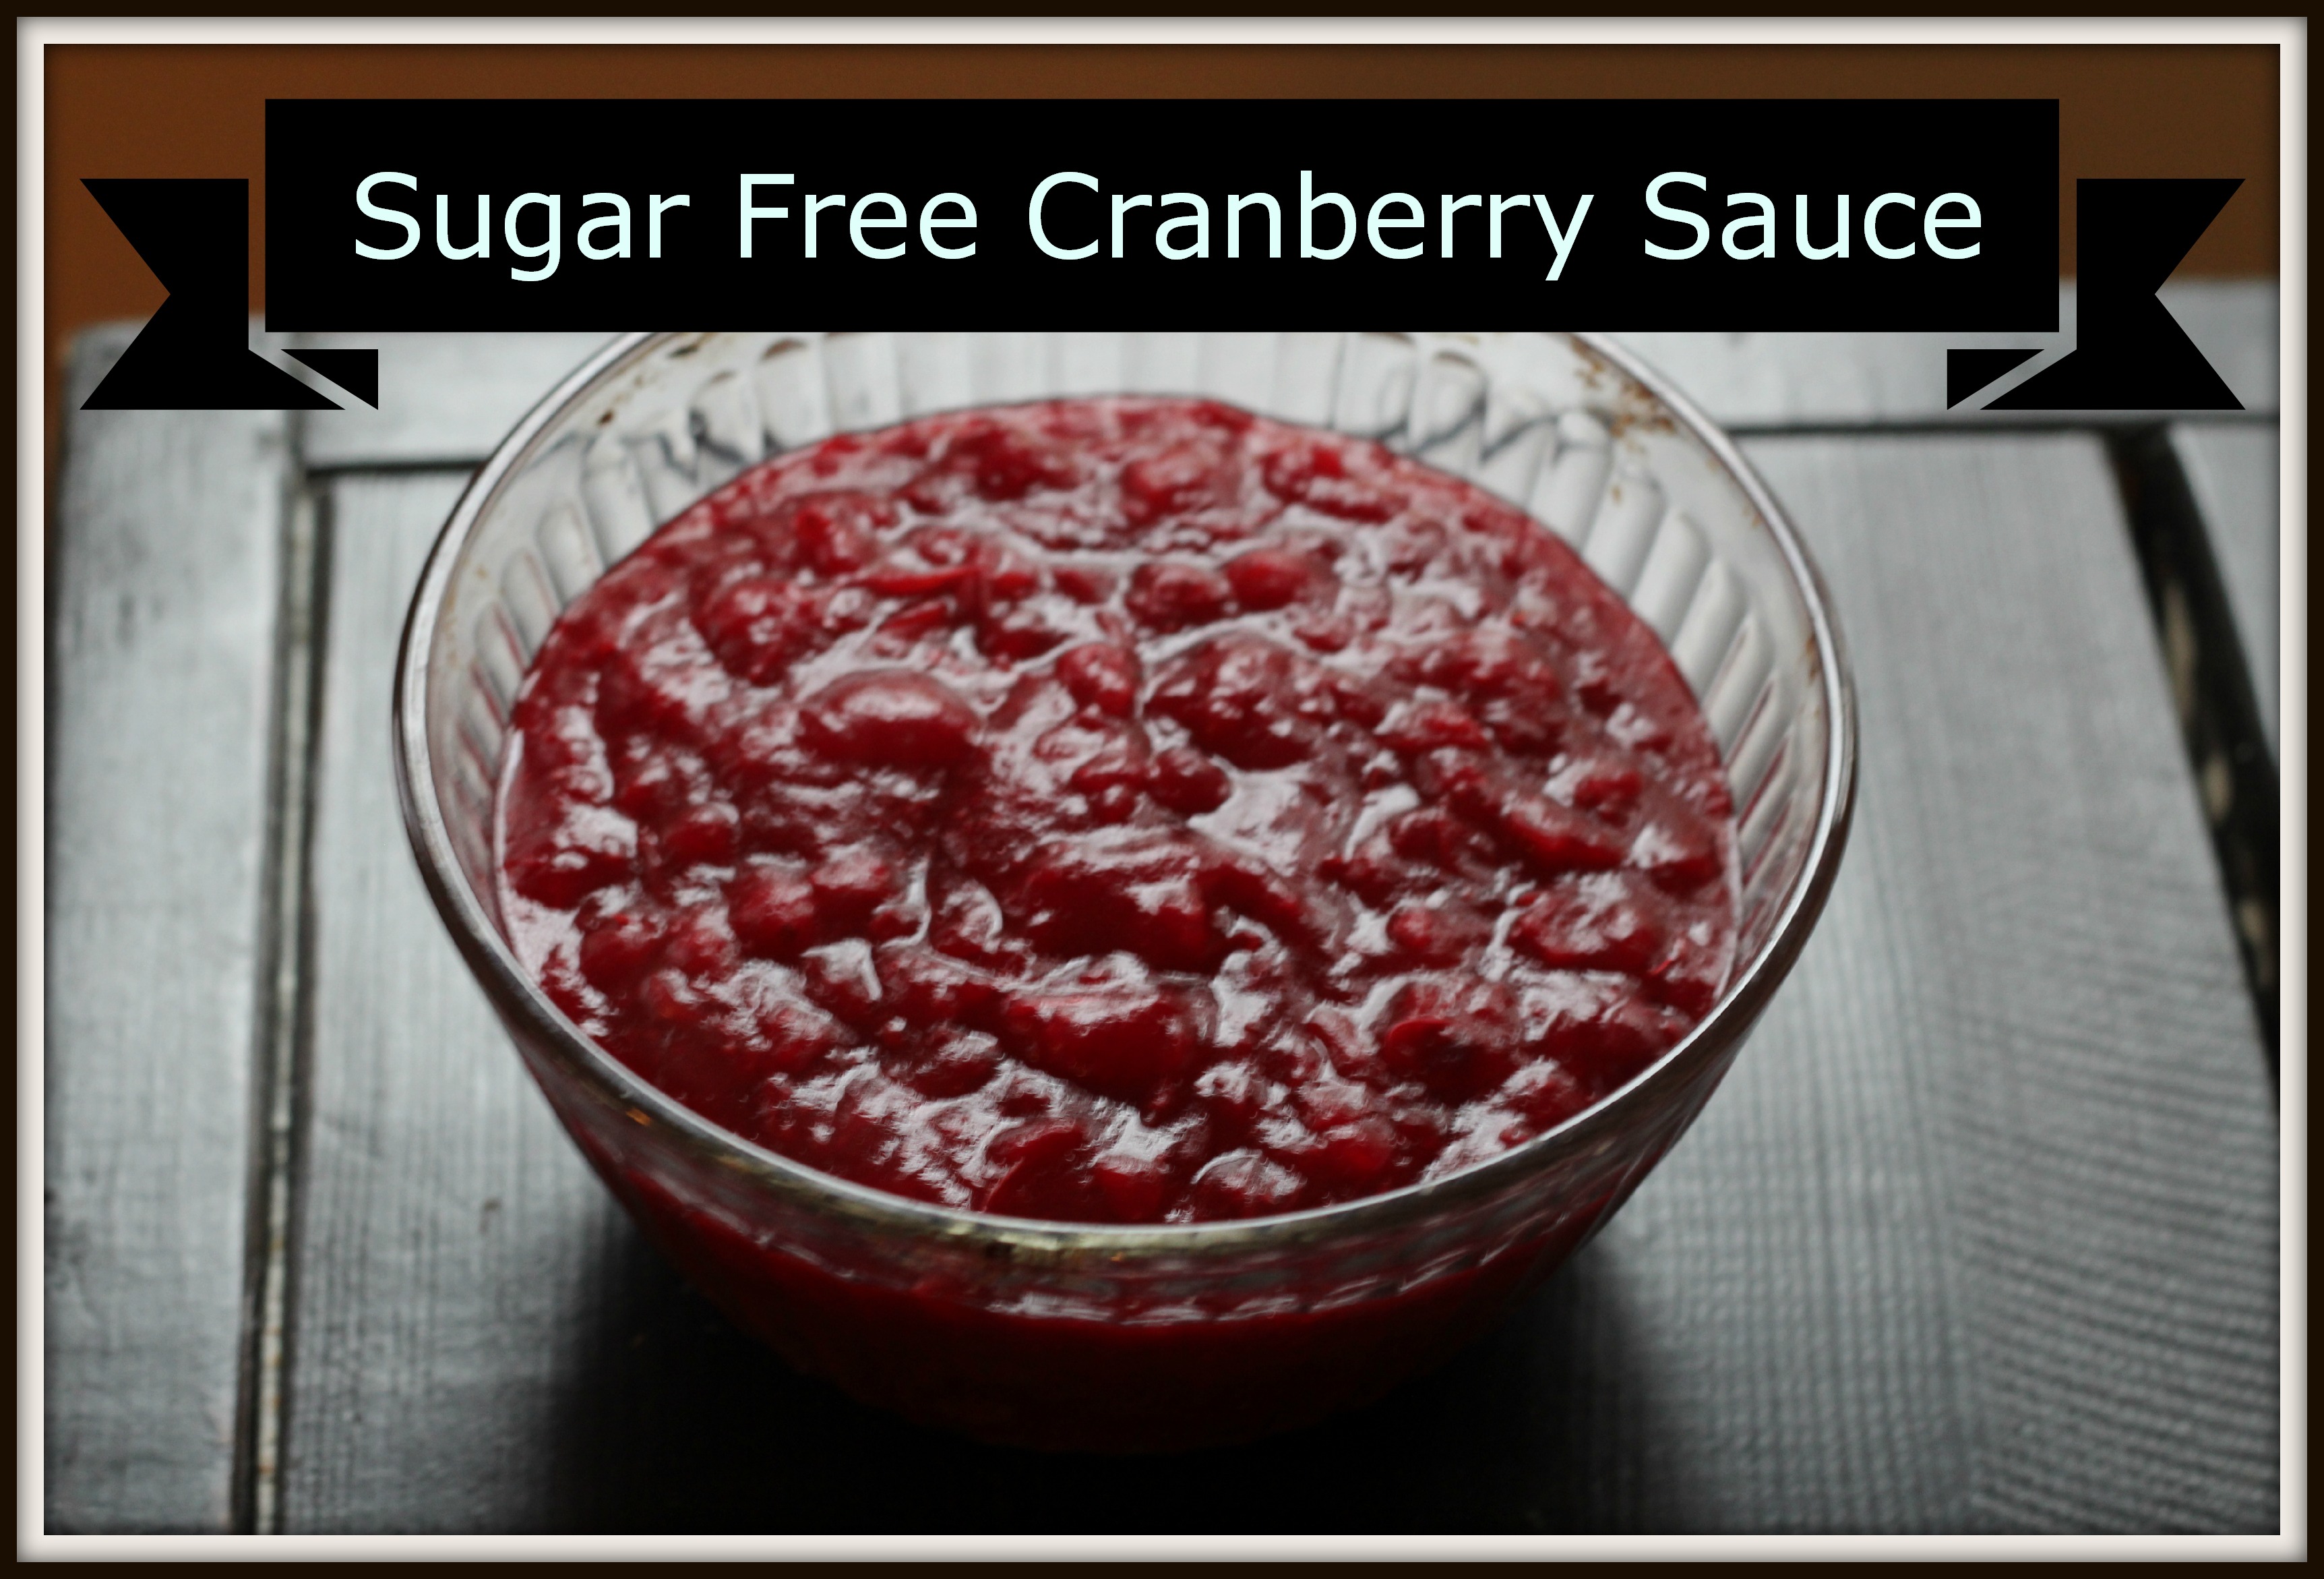 Sugar free cranberry sauce